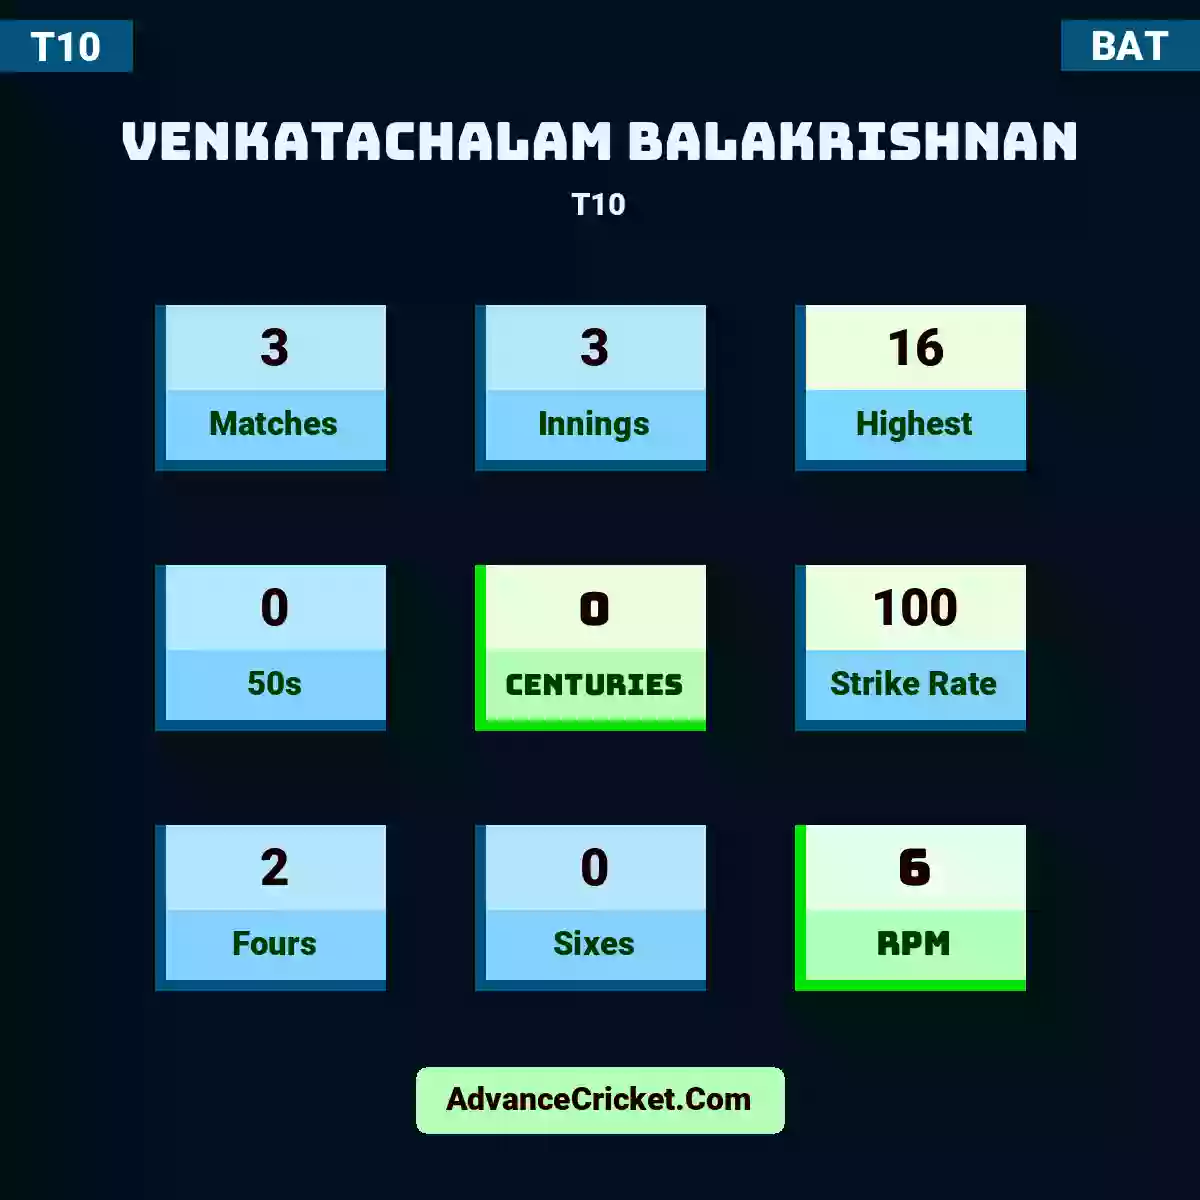 Venkatachalam Balakrishnan T10 , Venkatachalam Balakrishnan played 3 matches, scored 16 runs as highest, 0 half-centuries, and 0 centuries, with a strike rate of 100. V.Balakrishnan hit 2 fours and 0 sixes, with an RPM of 6.